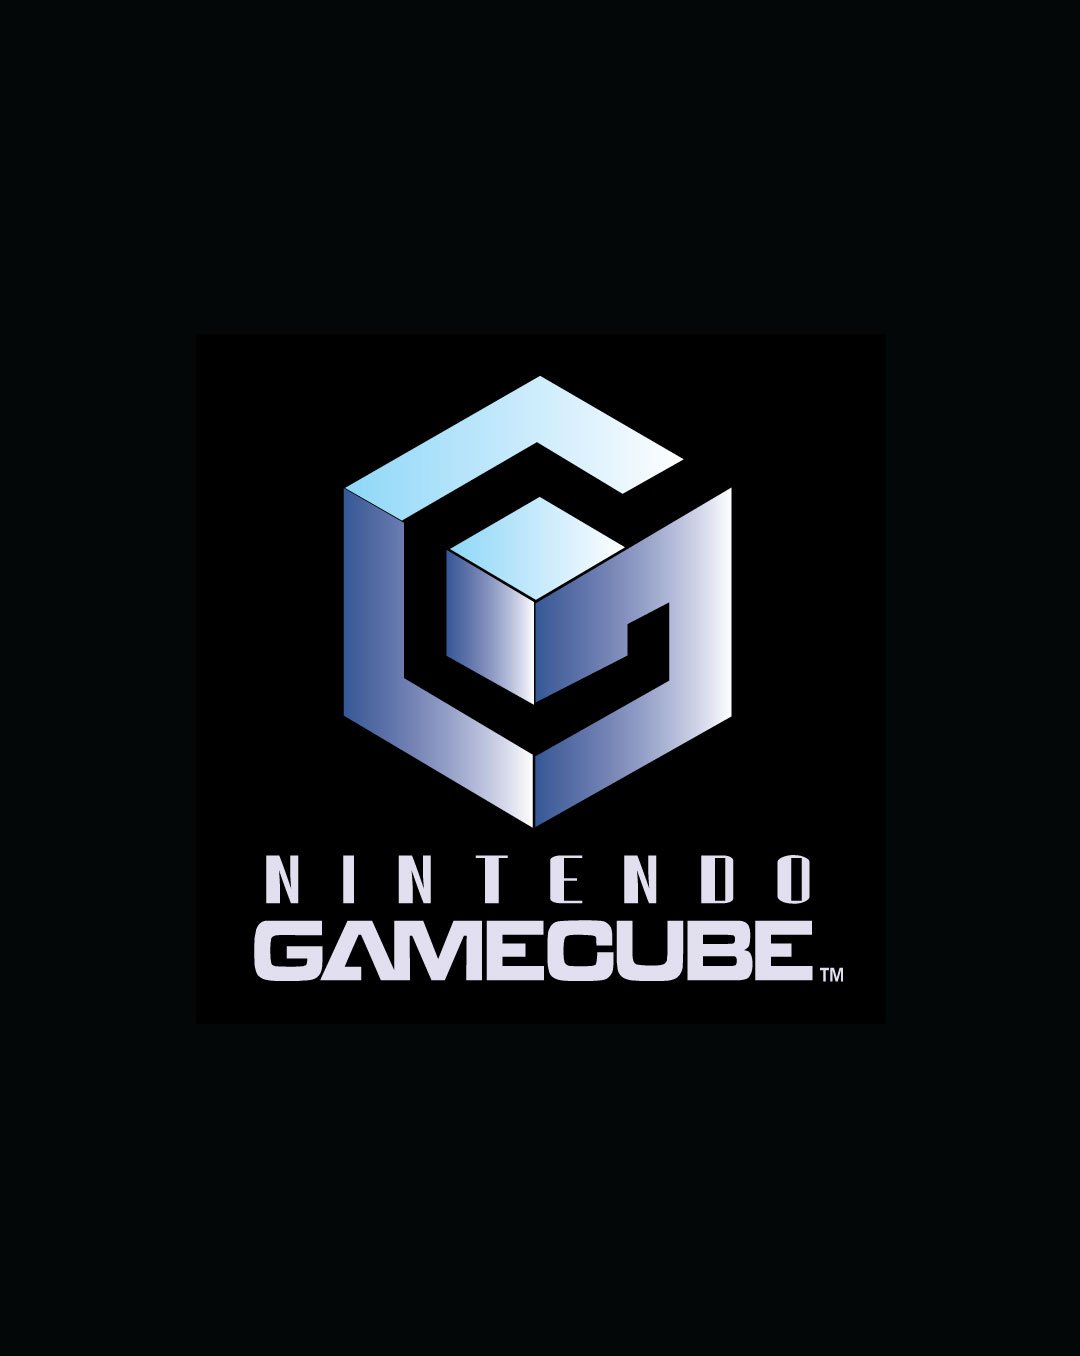 Nintendo GAMECUBE collection. Nintendo GAMECUBE logo. Логотип консоли. Aqrarco MMC logo. Within c